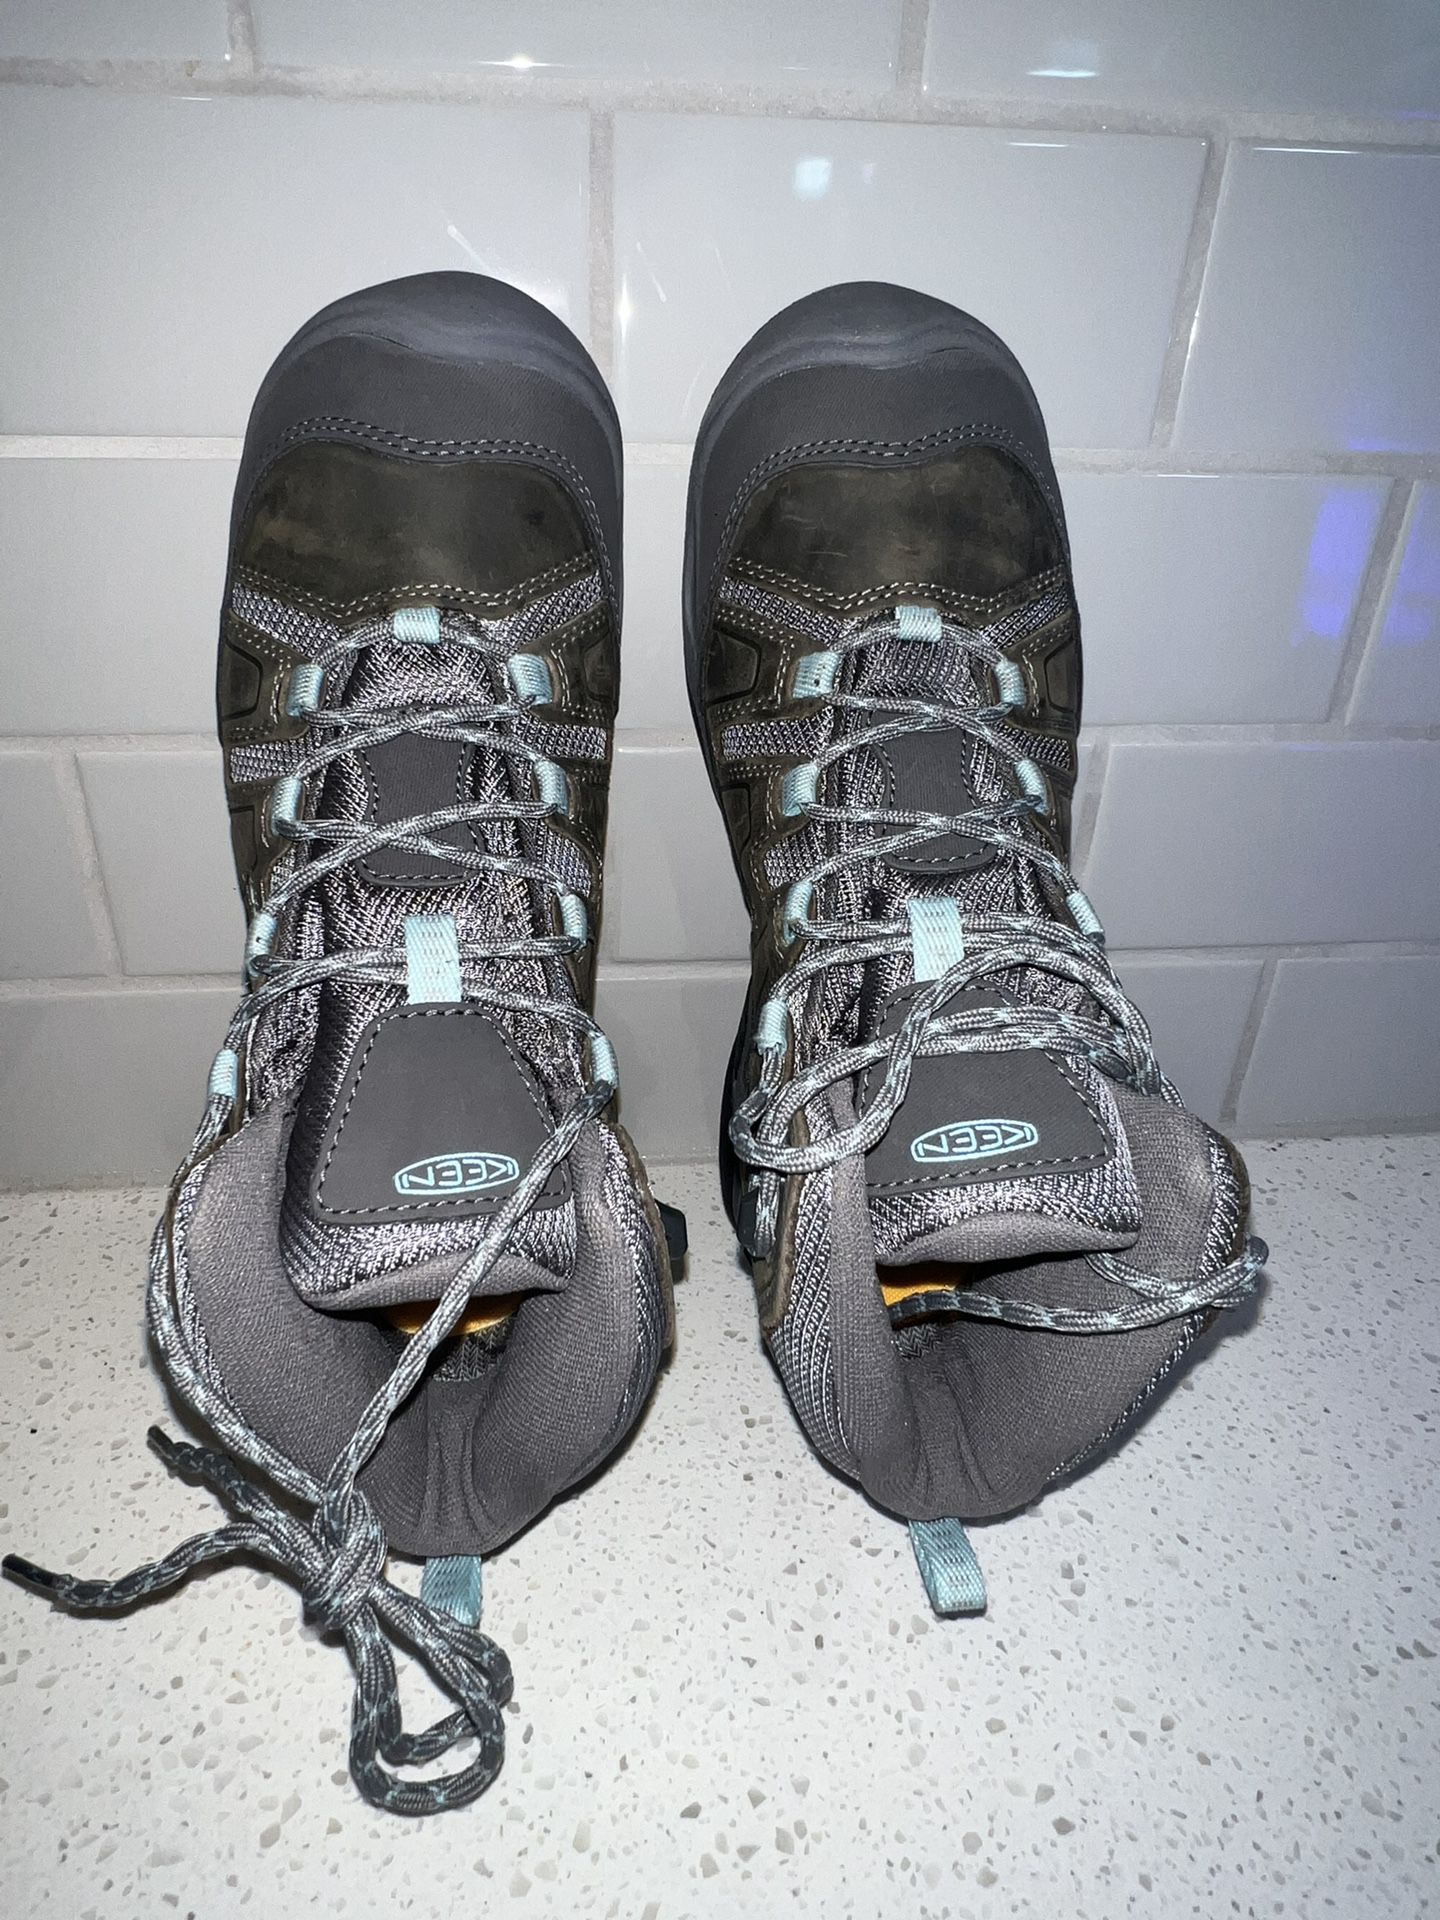 KEEN Women's Targhee 3 Mid Height Waterproof Hiking Boots- Size 8